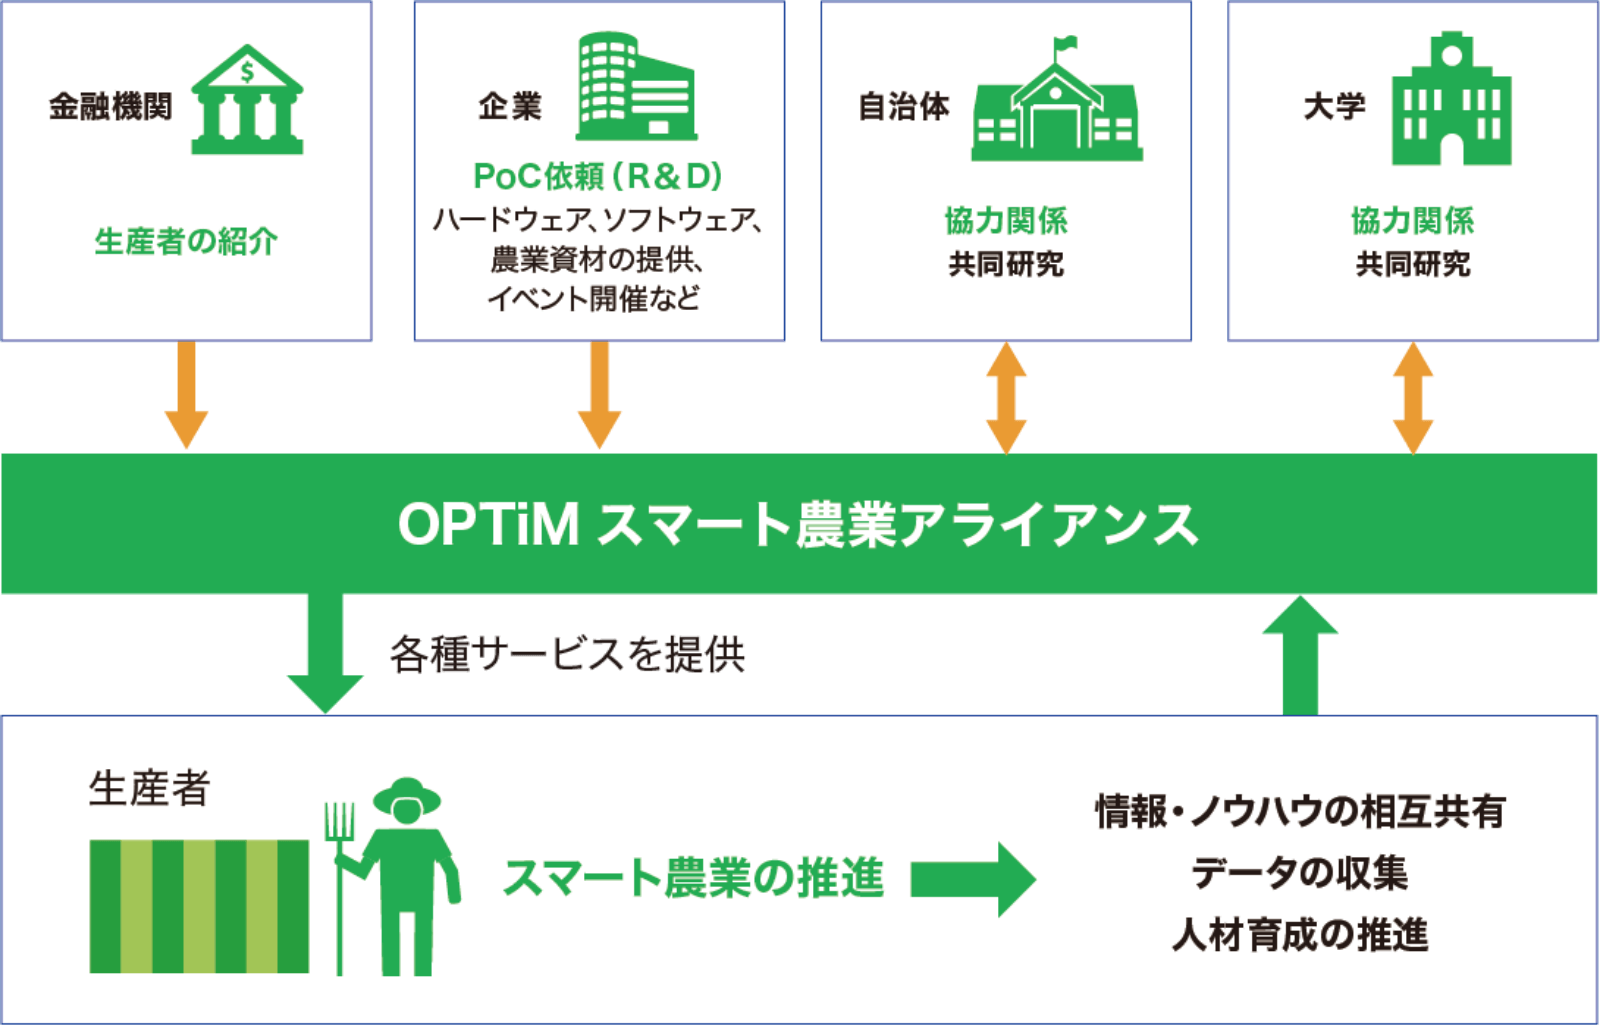 OPTiM スマート農業アライアンスのビジネスモデル